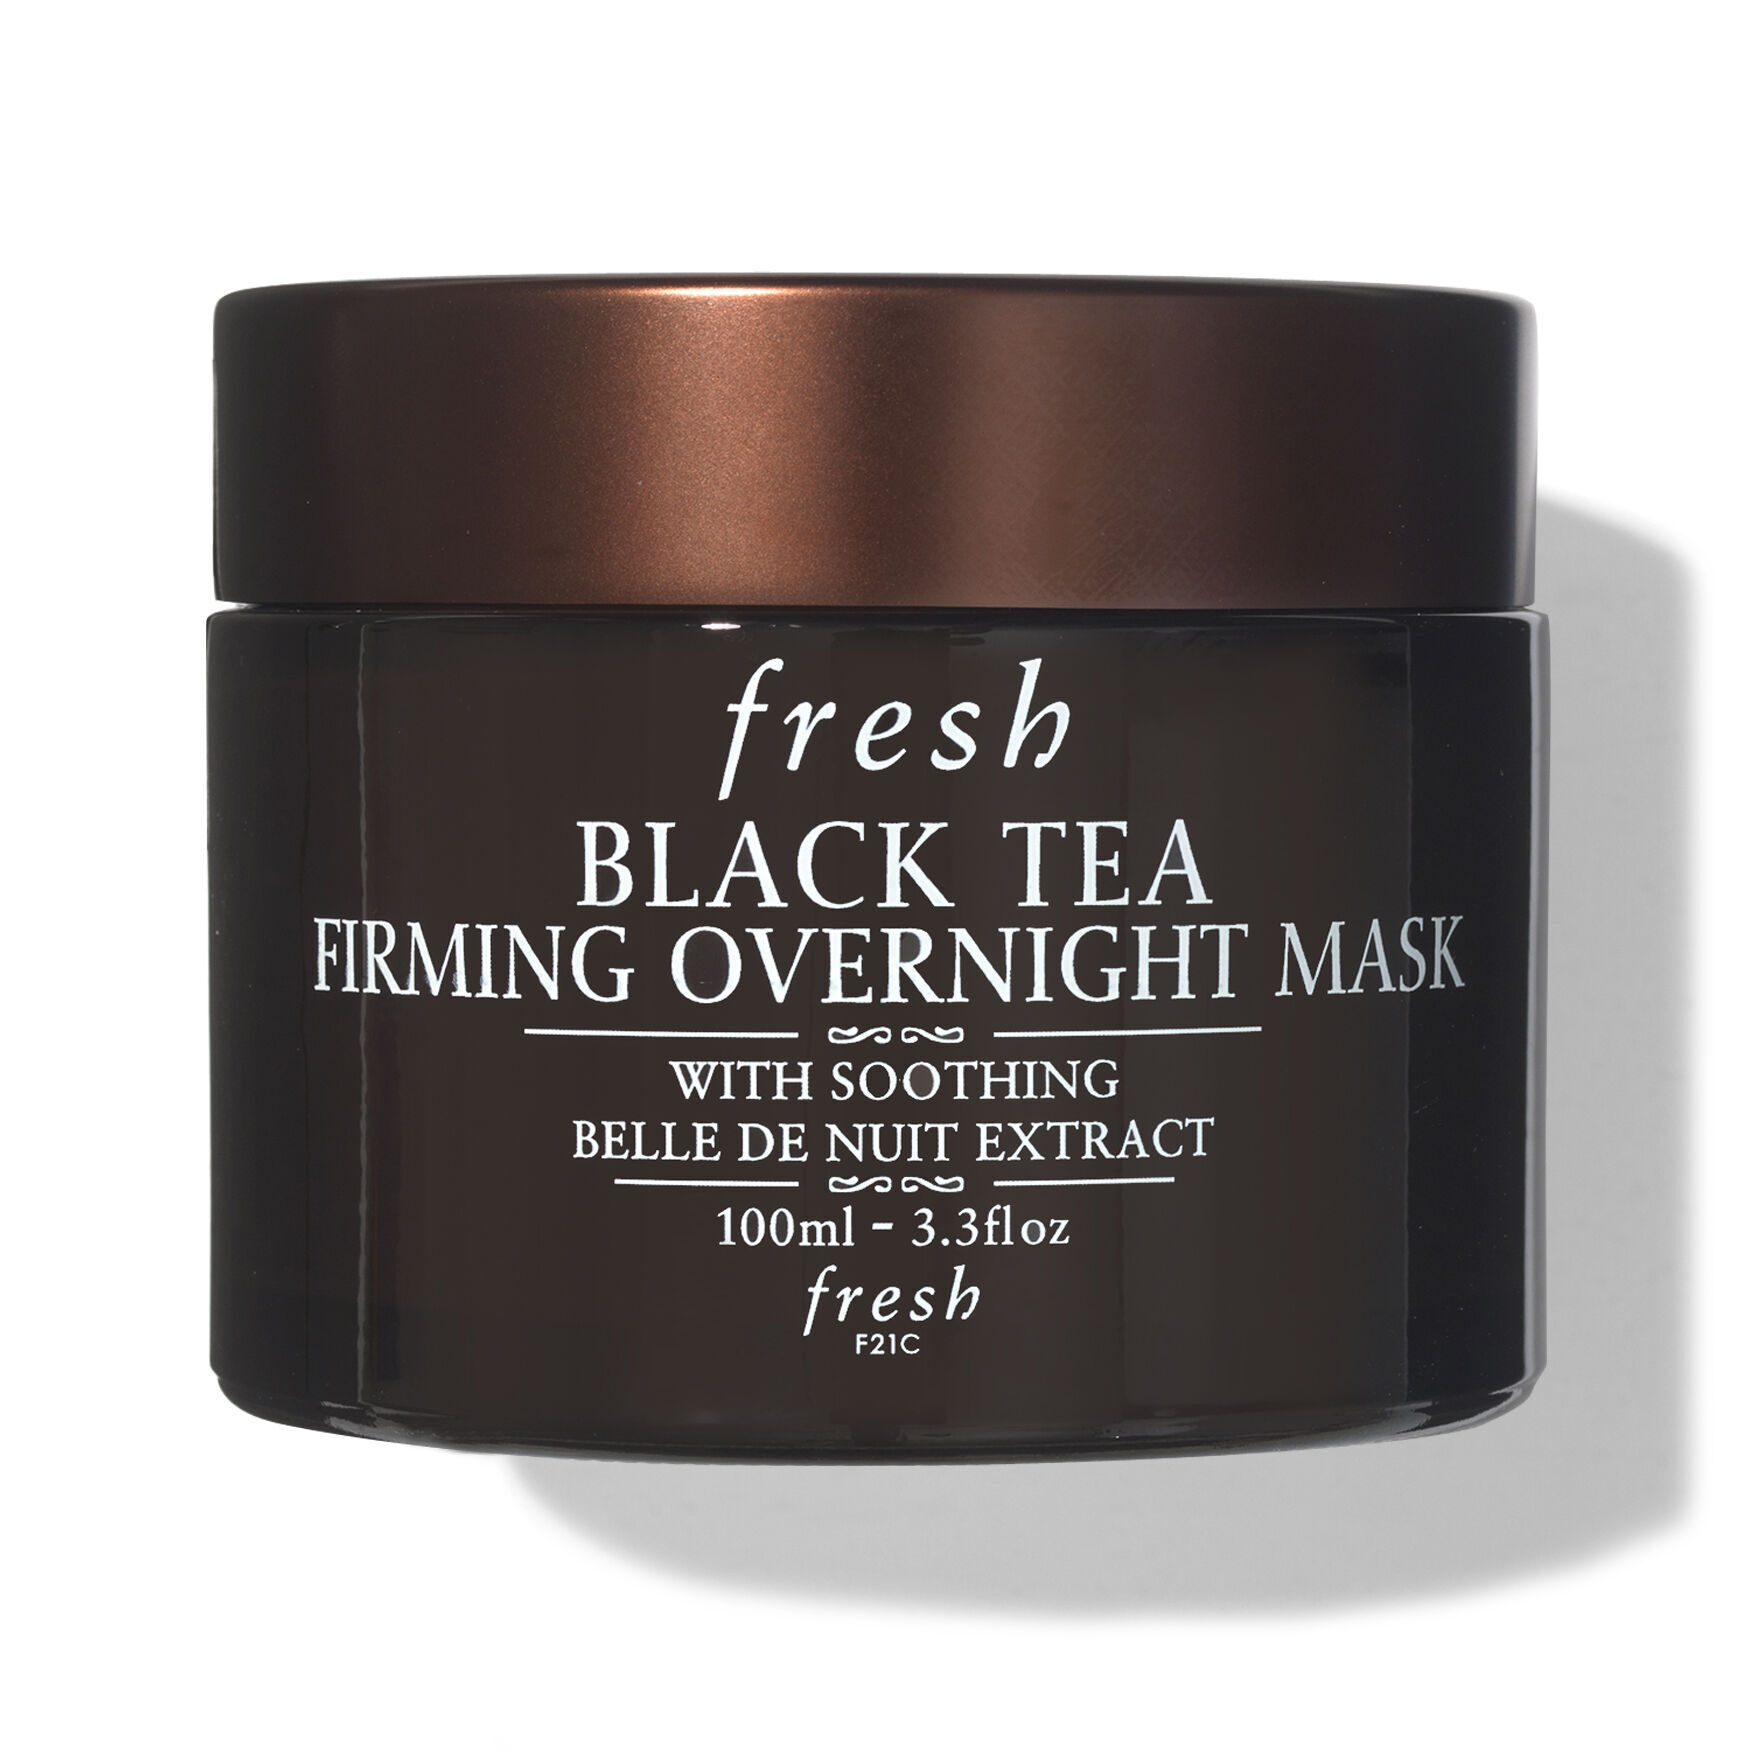 Fresh - Black Tea Firming Overnight Mask by Fresh